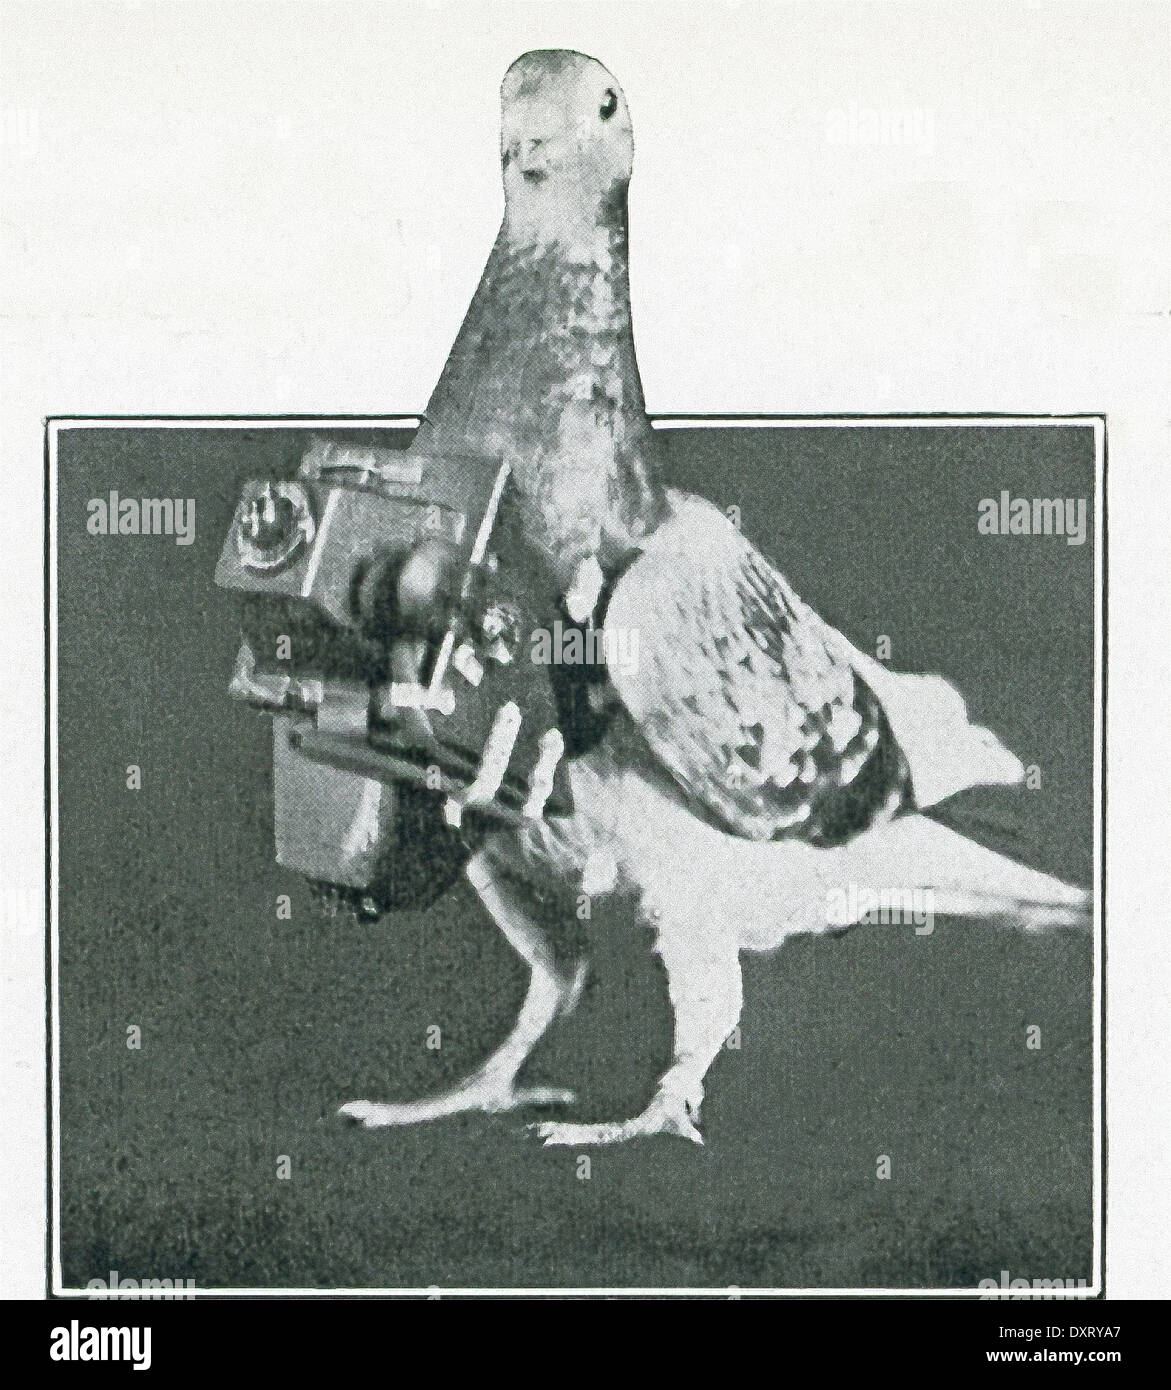 Carrier pigeons immagini e fotografie stock ad alta risoluzione - Alamy